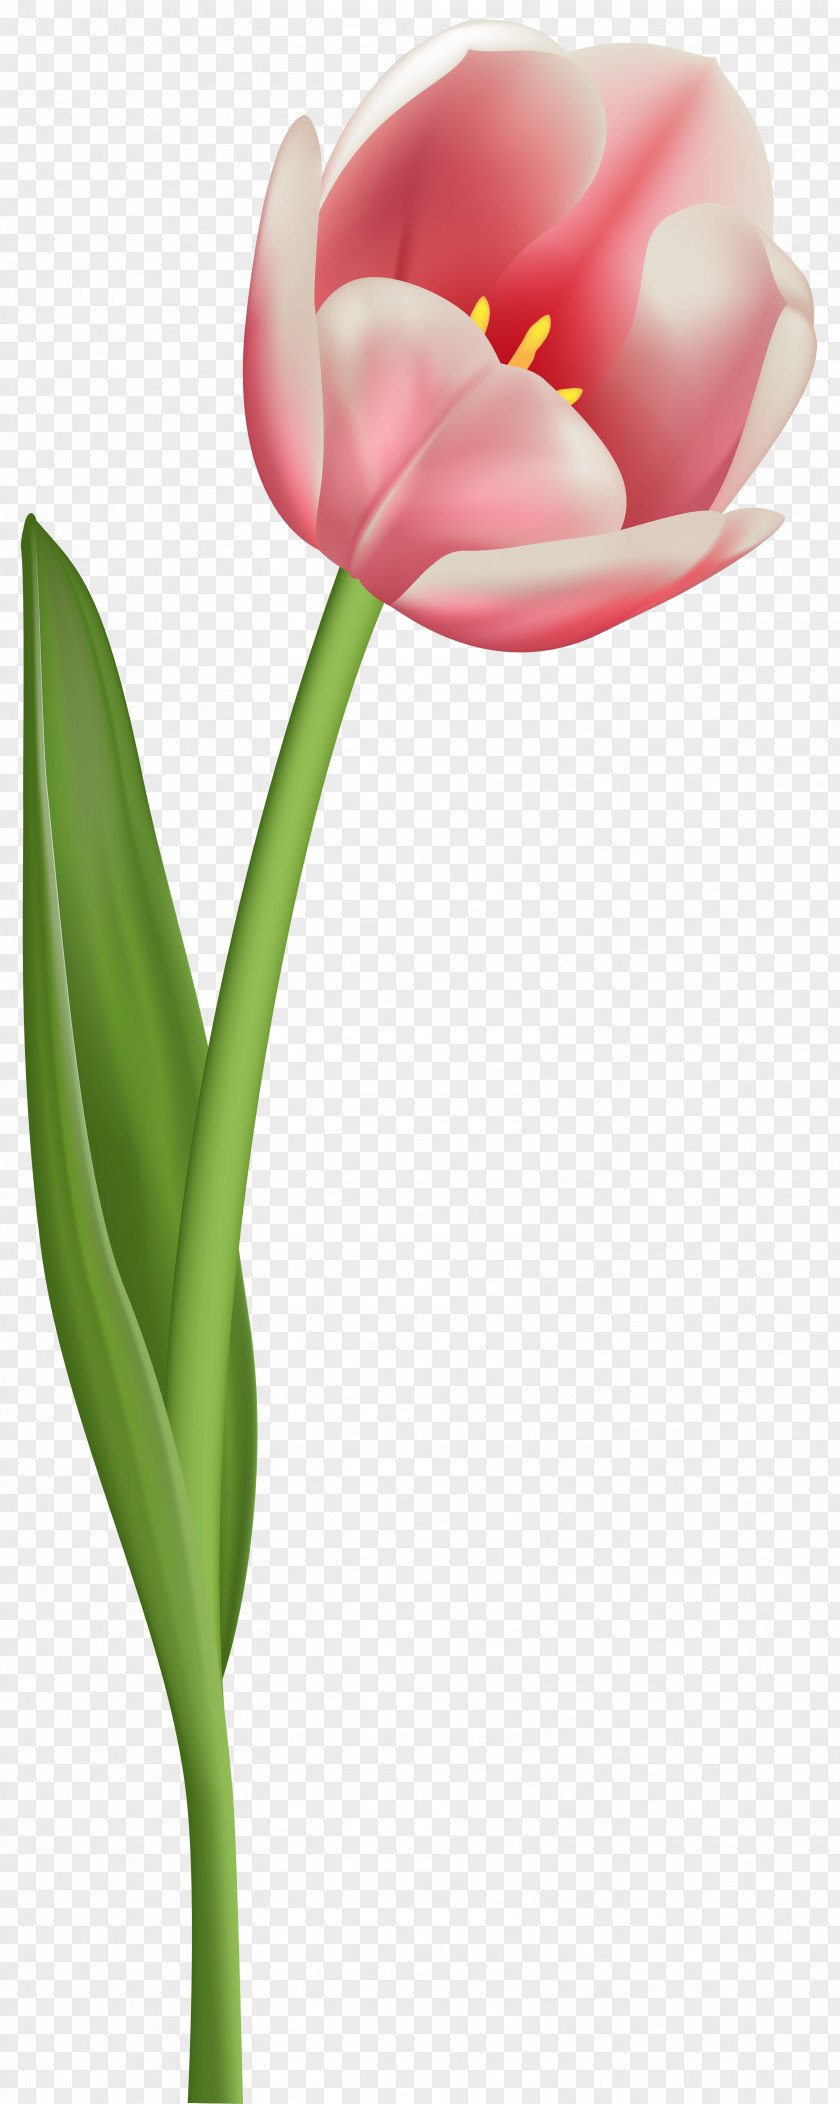 Rustic Flowers Tulip Mania Flower Clip Art PNG